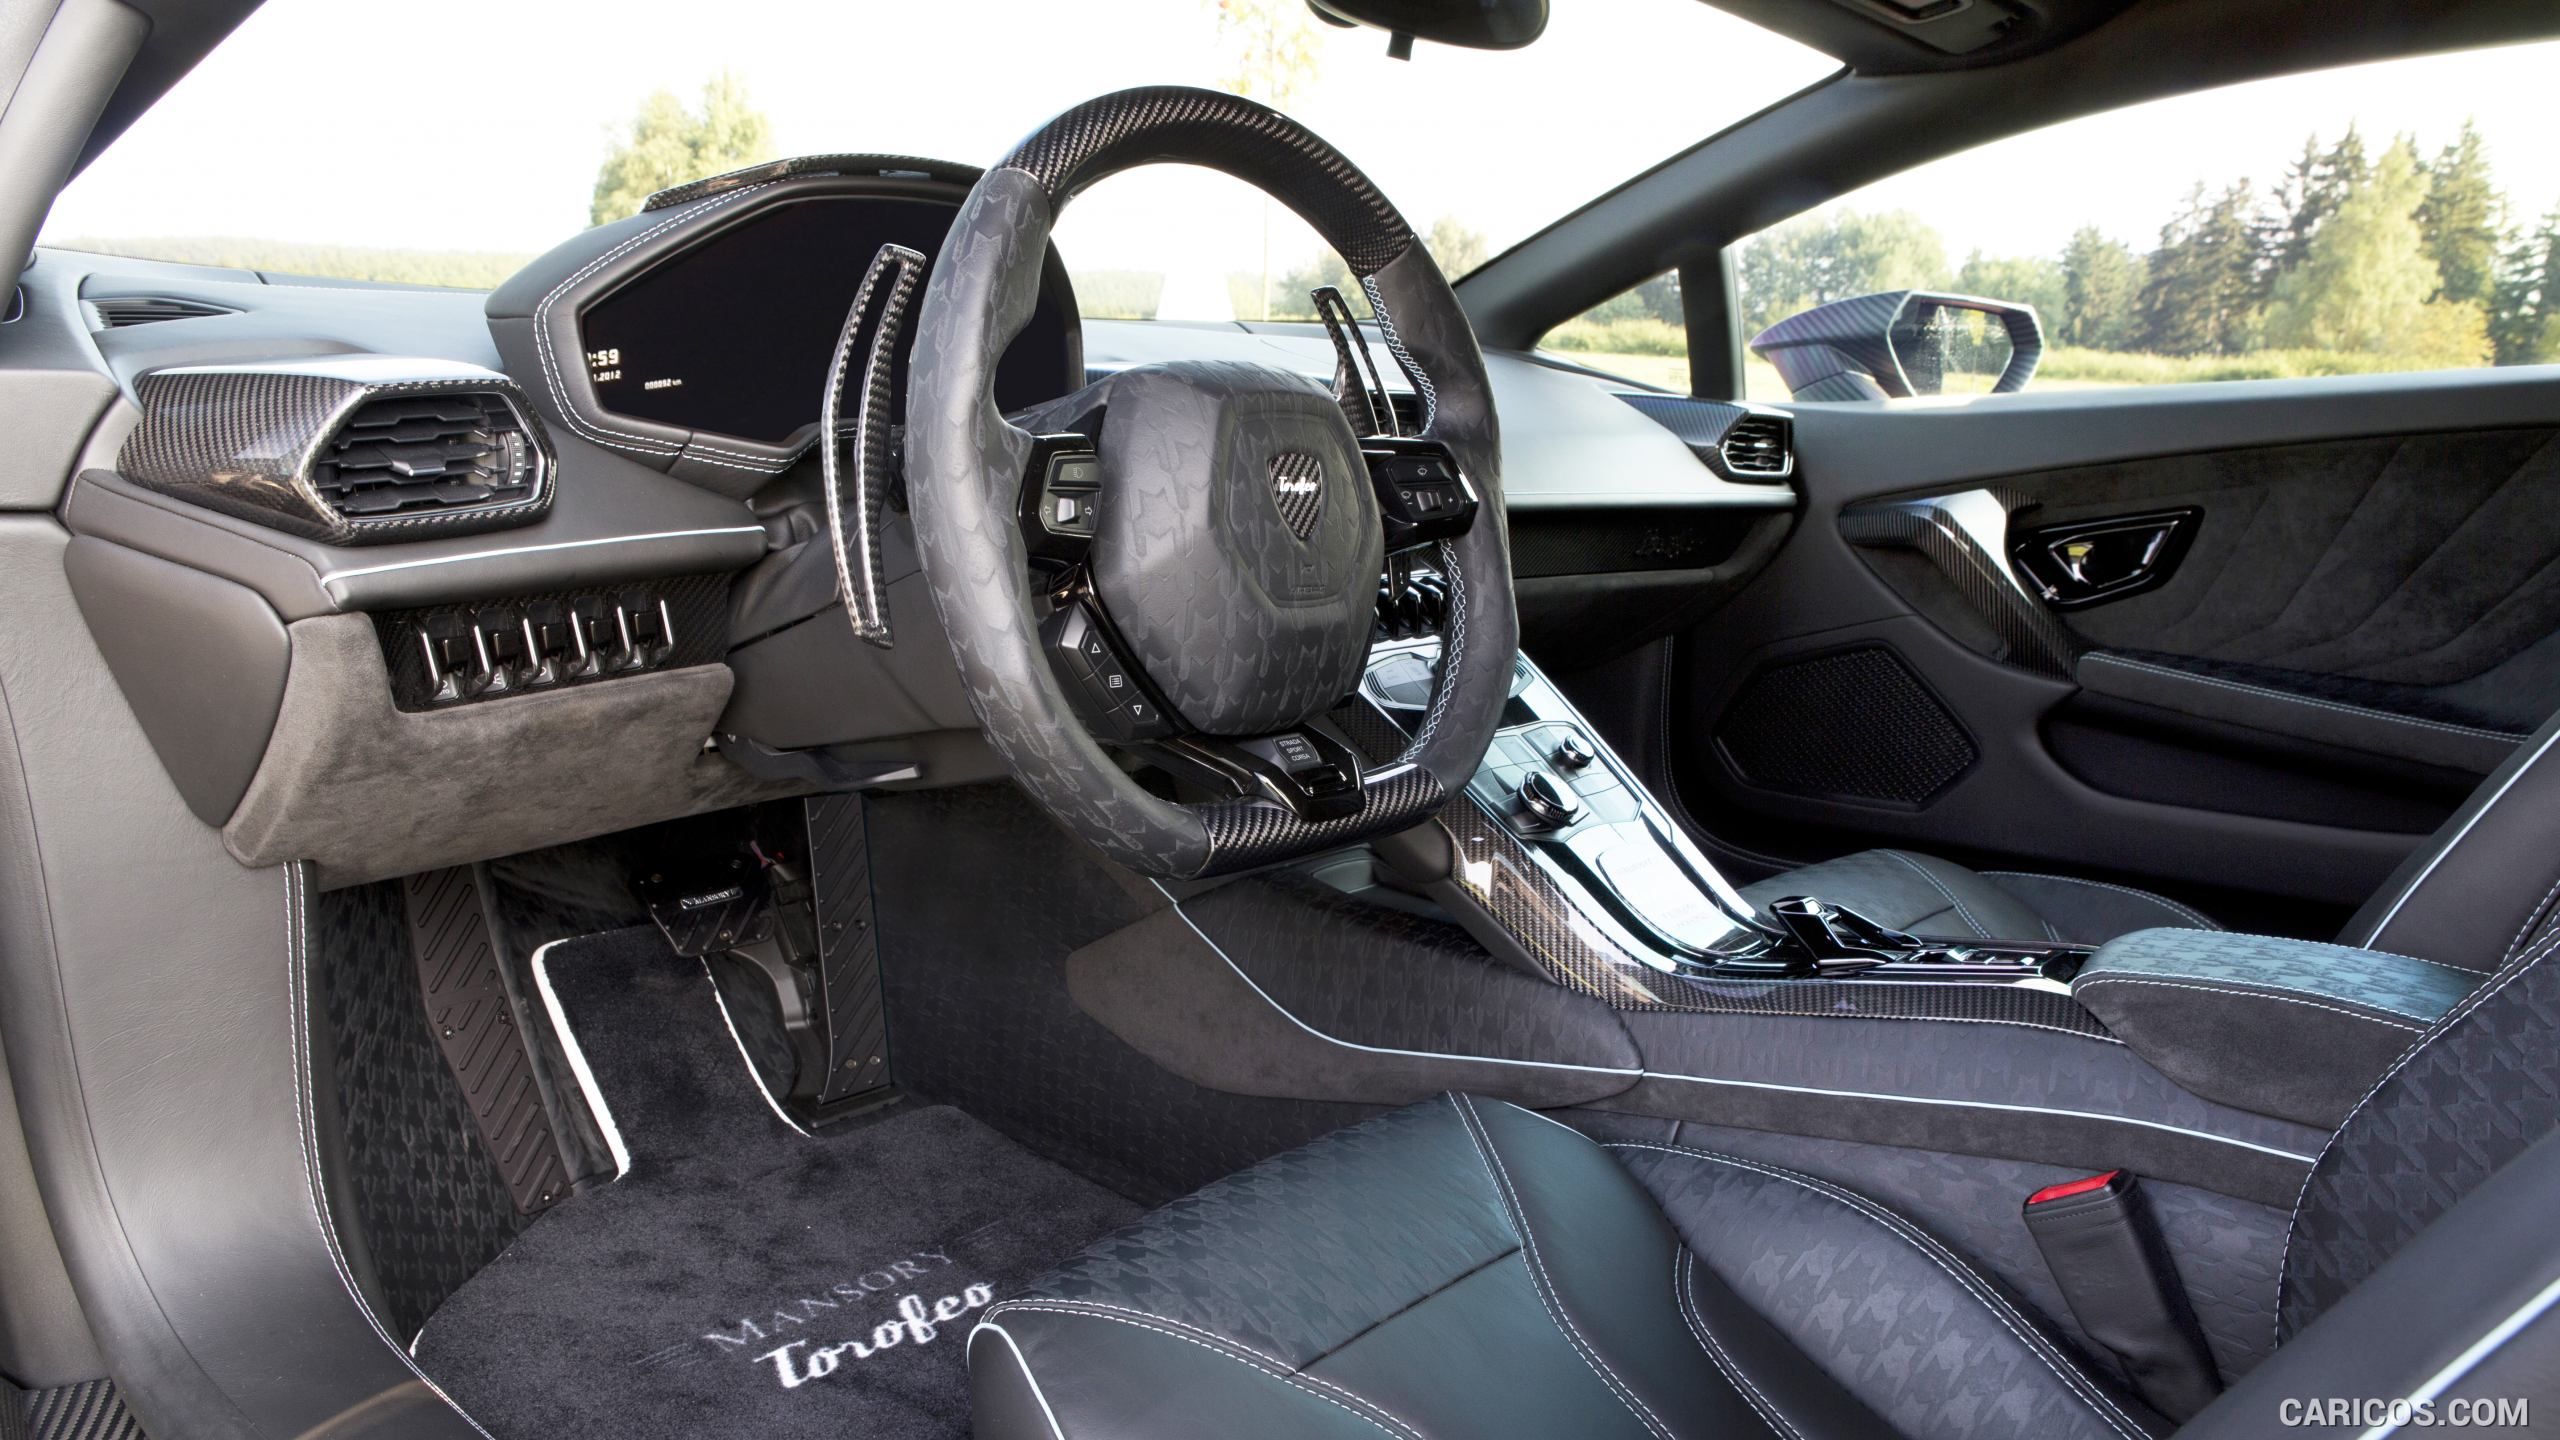 2016 Mansory Torofeo Based On Lamborghini Huracan Interior